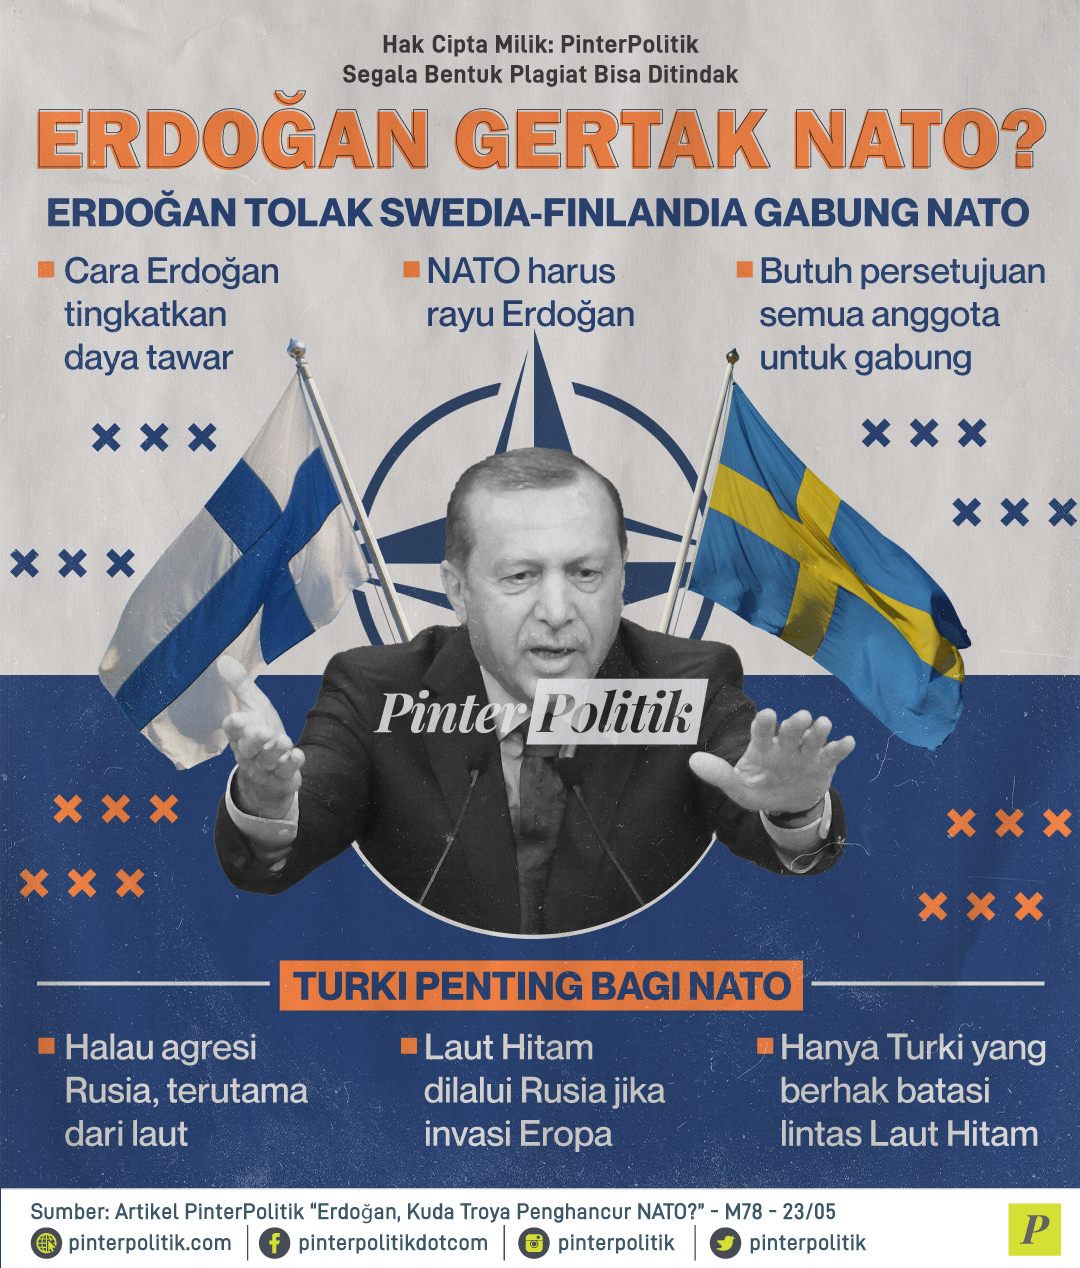 Erdogan Gertak NATO